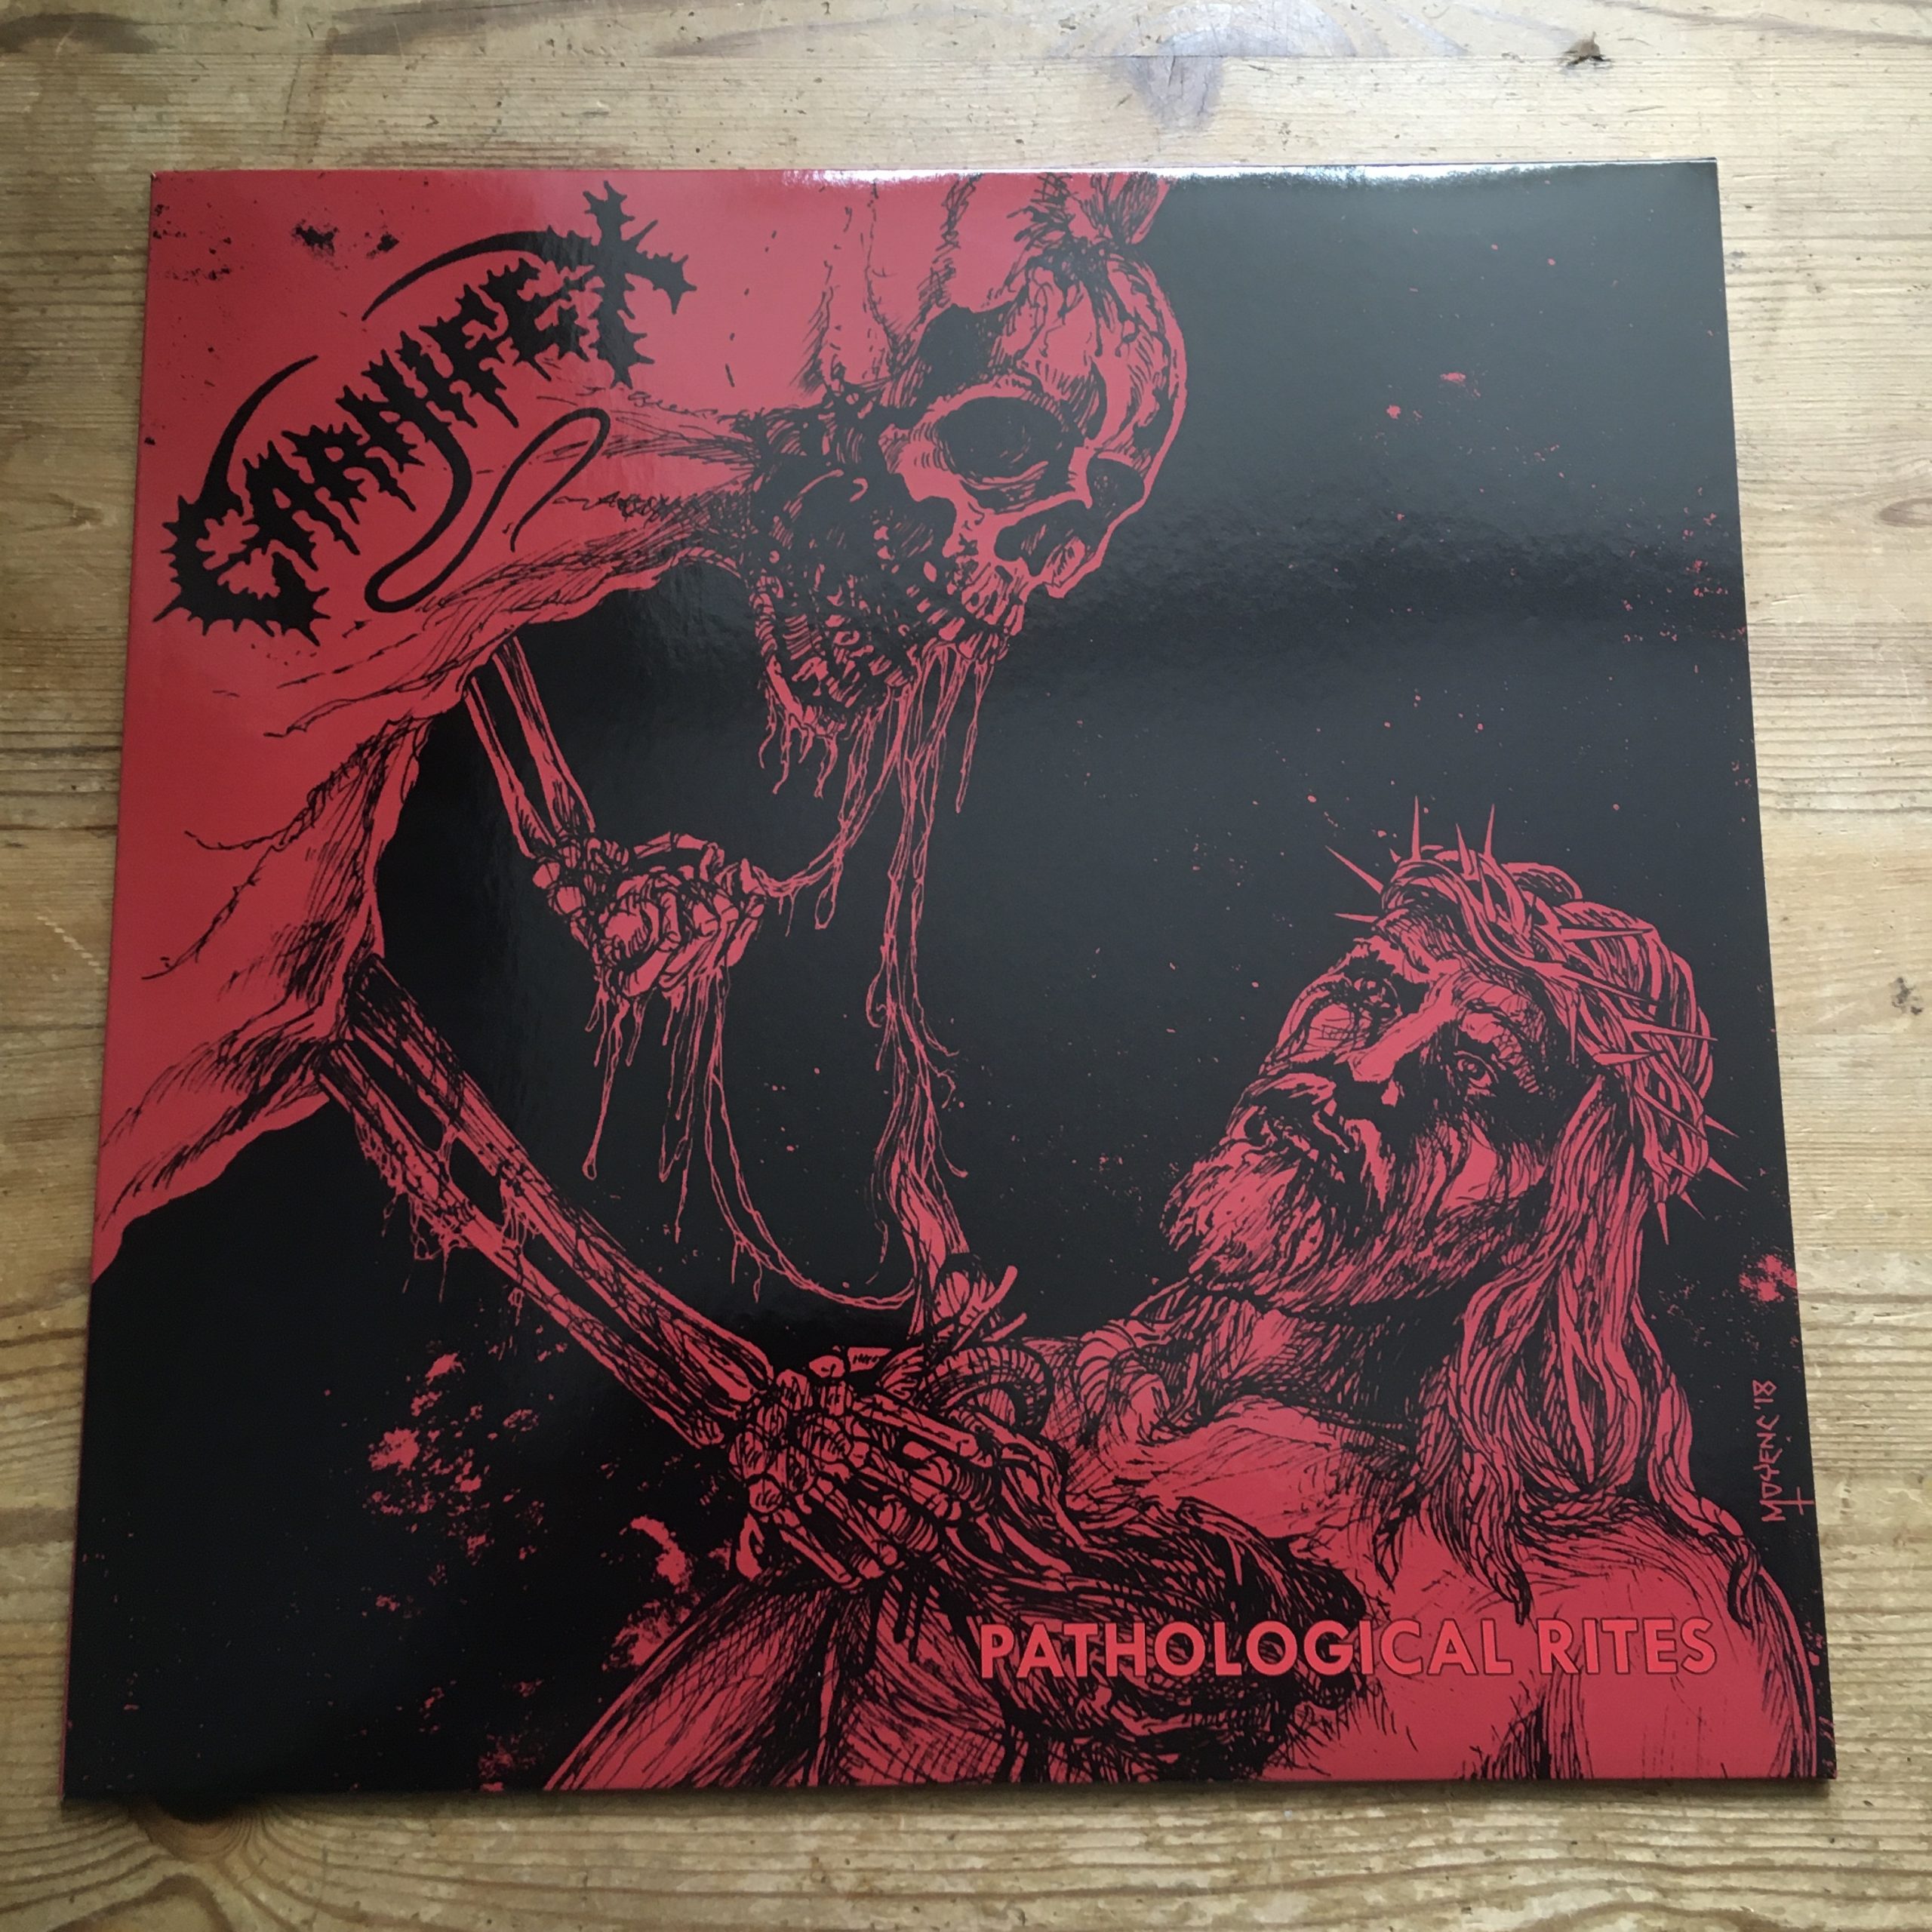 Photo of the Carnifex - "Pathological Rites" LP (Black vinyl)